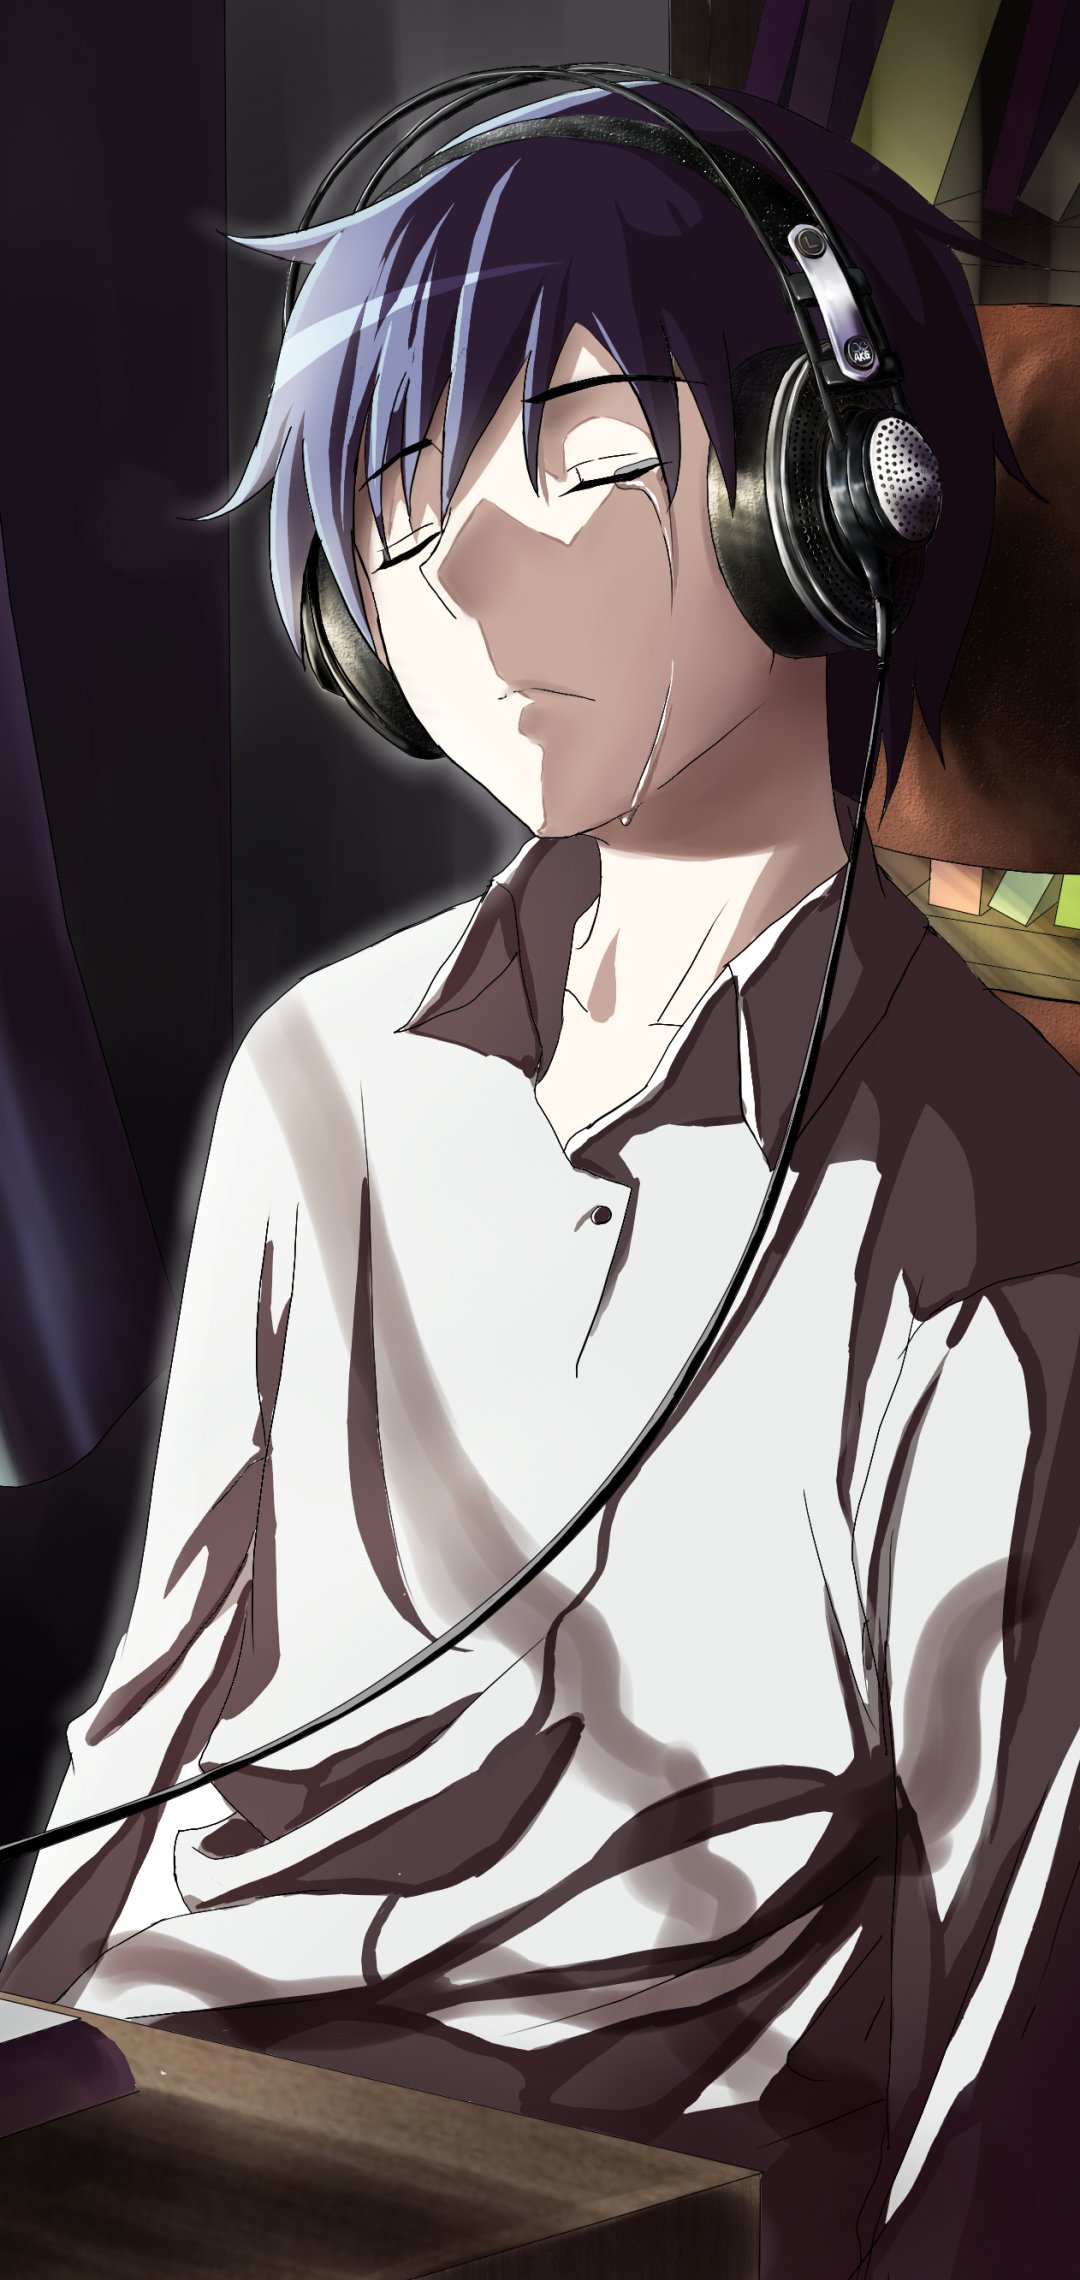 Anime Headphones (1080x2280) Wallpaper